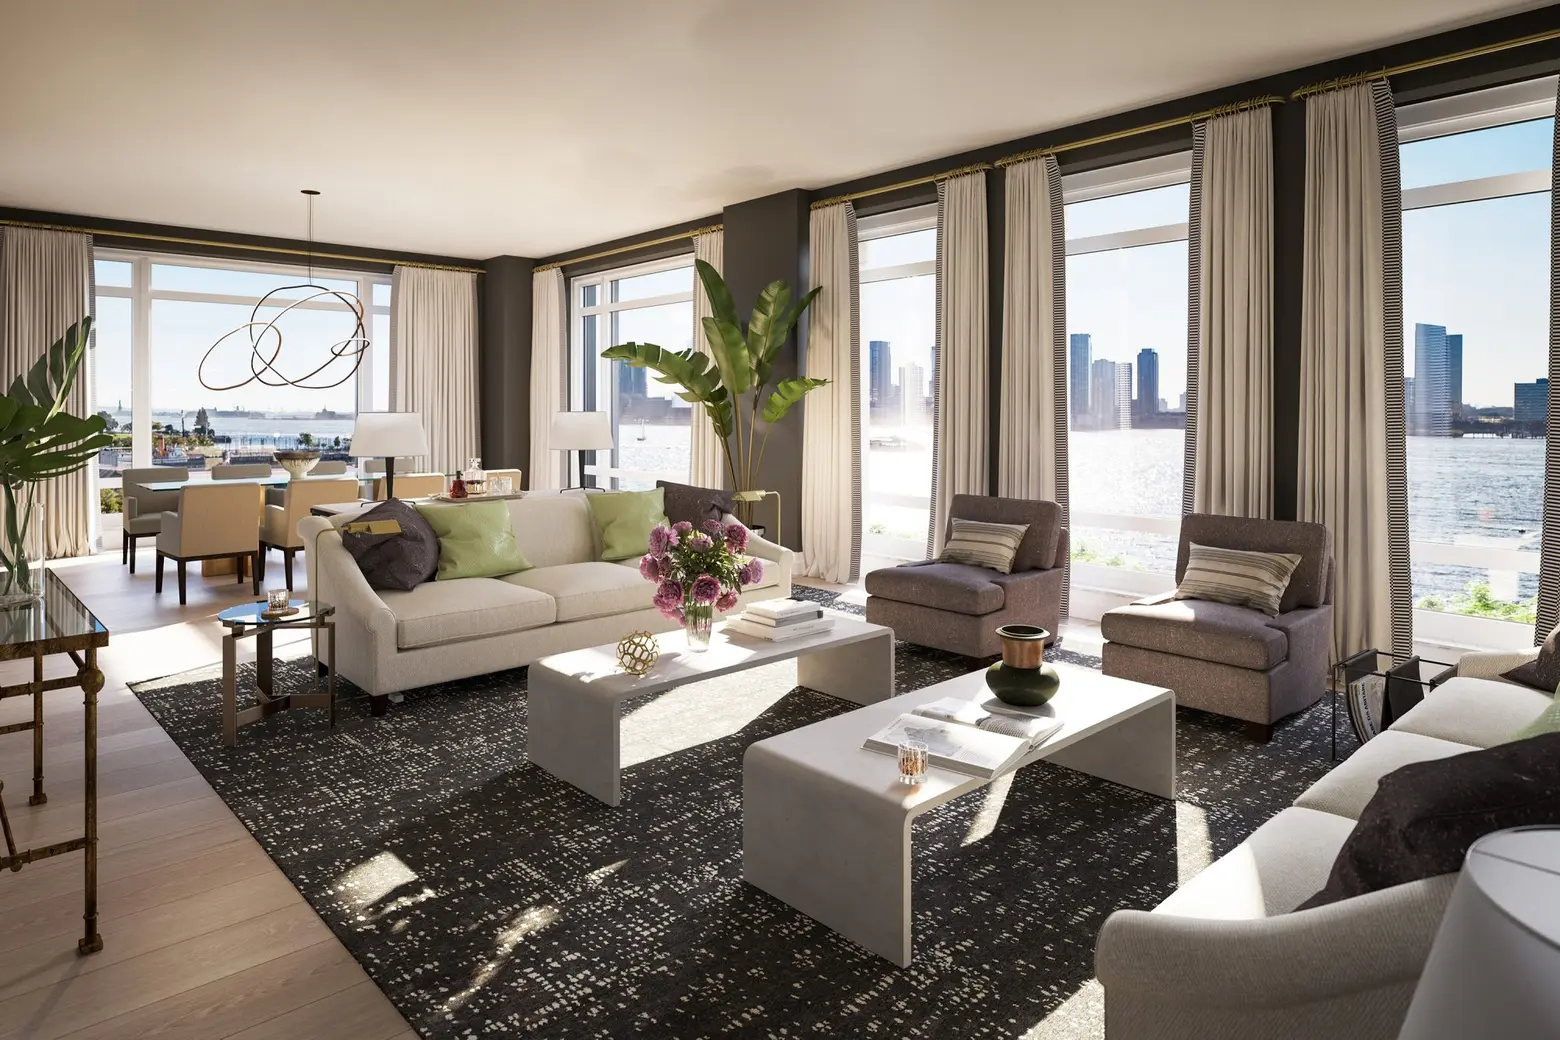 Lavish $65M penthouse unveiled at Robert A.M. Stern’s 70 Vestry